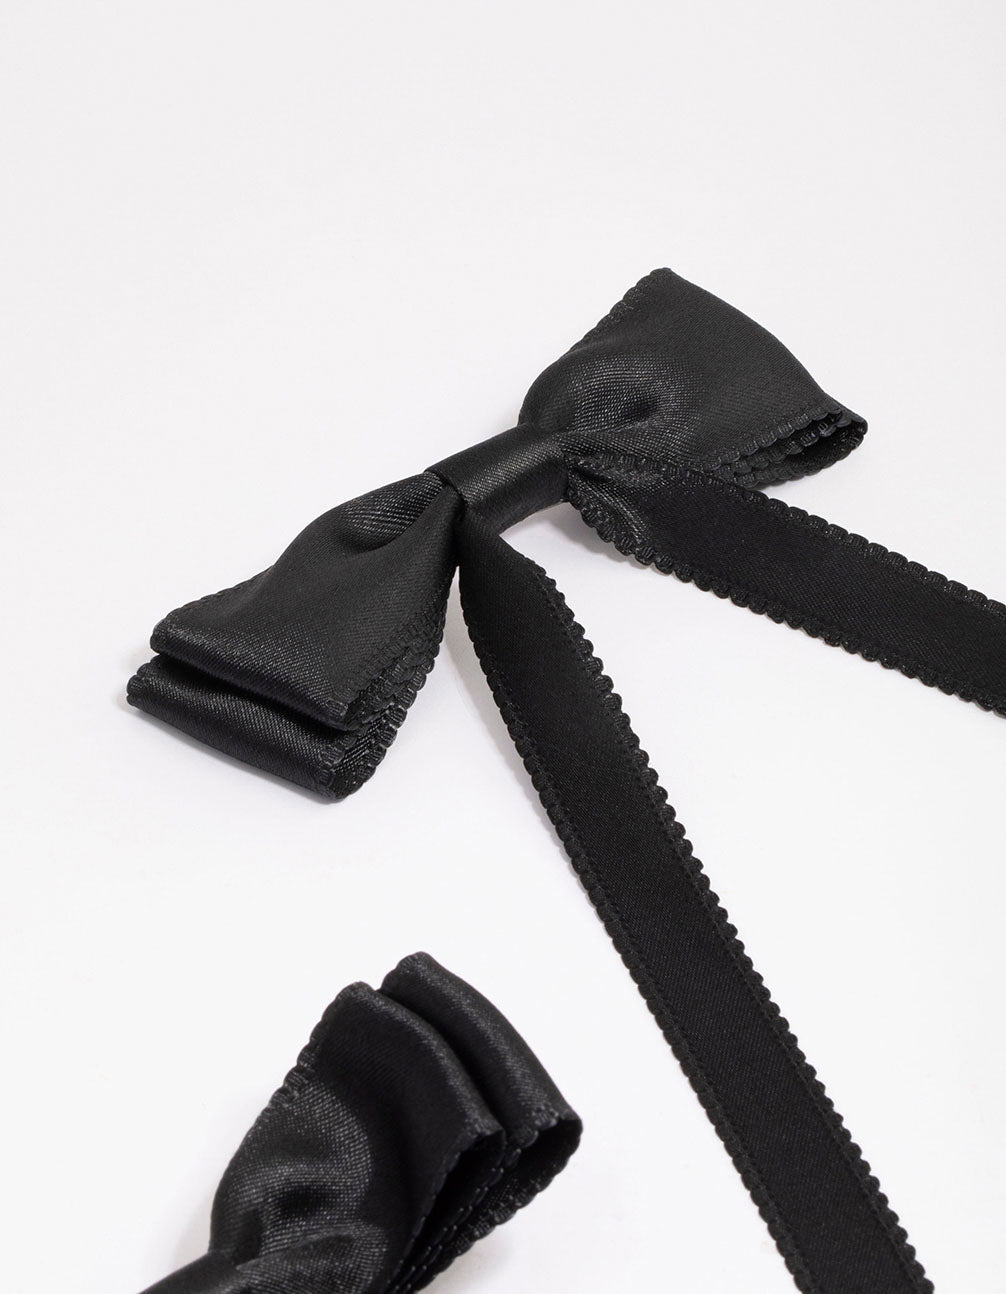 Black Fabric Satin Scallop Hair Bow Pack